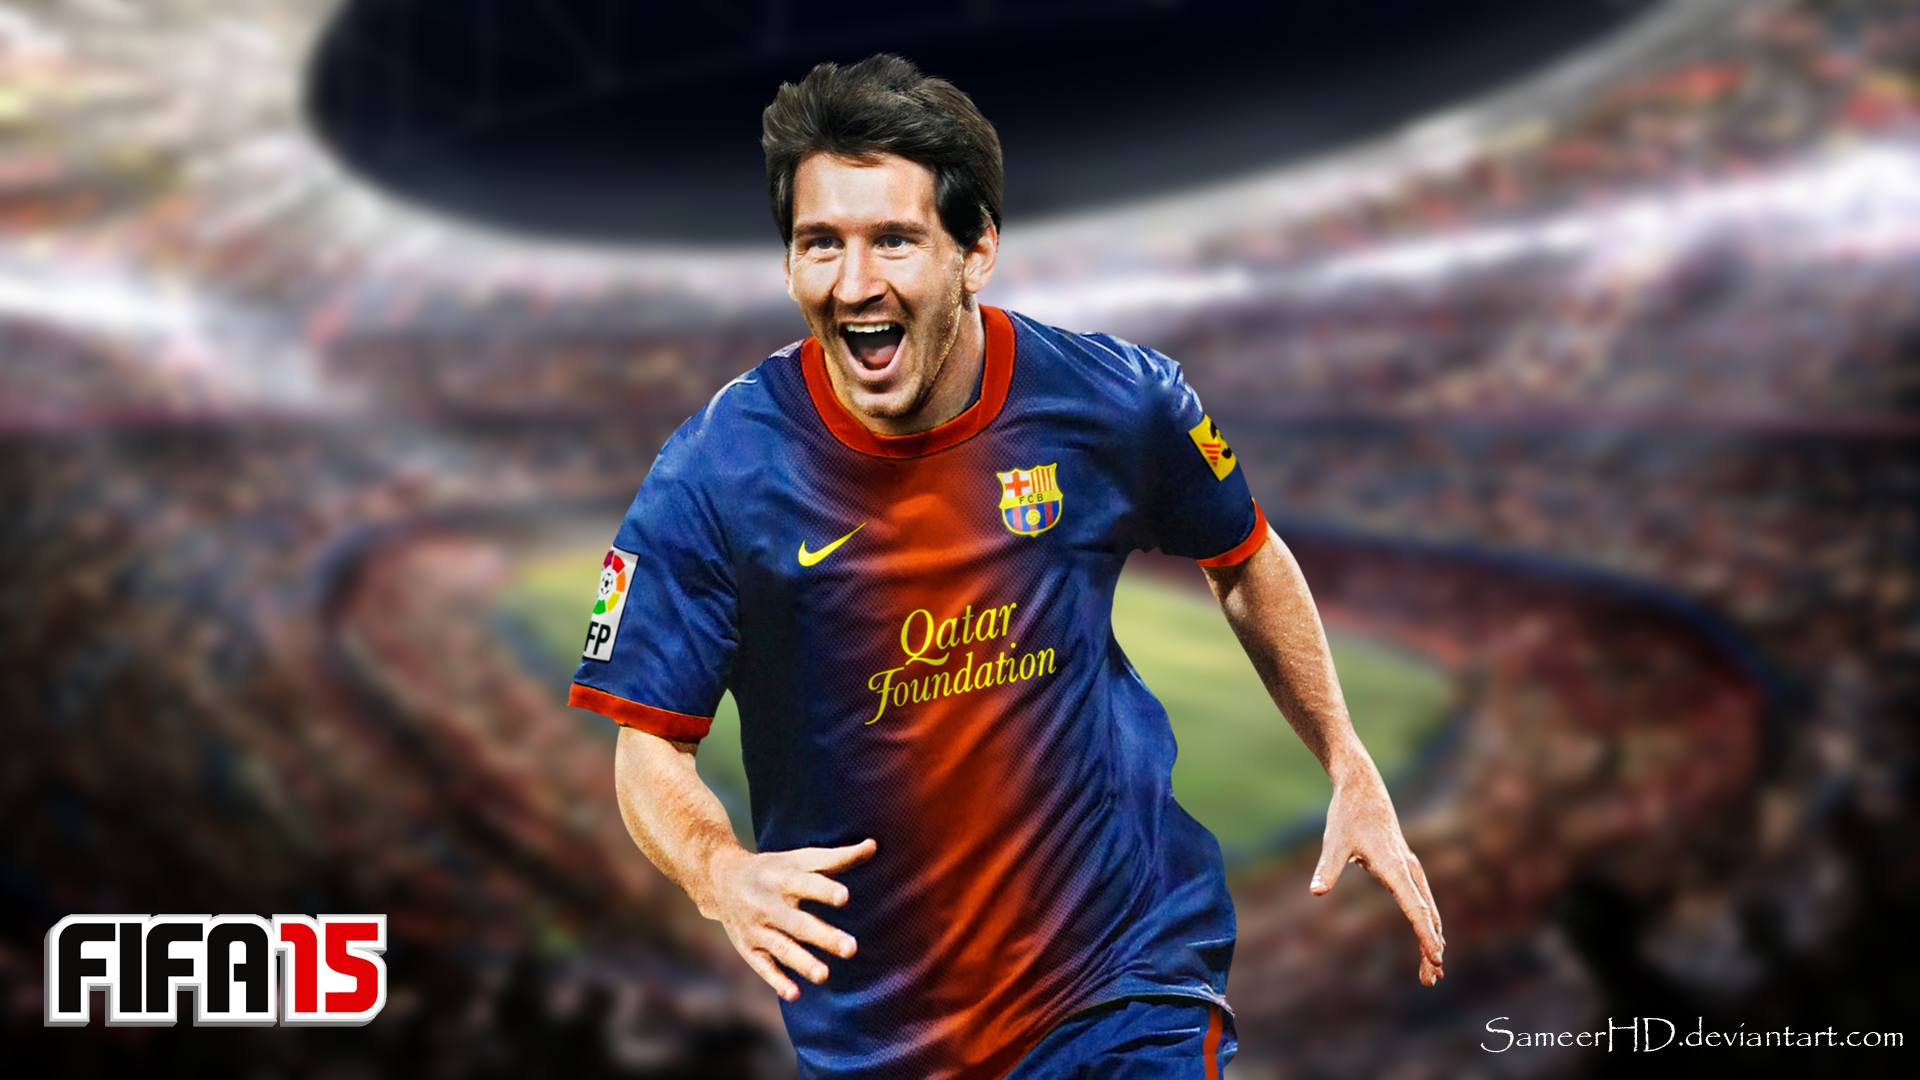 [40+] Messi FIFA 15 Wallpaper on WallpaperSafari